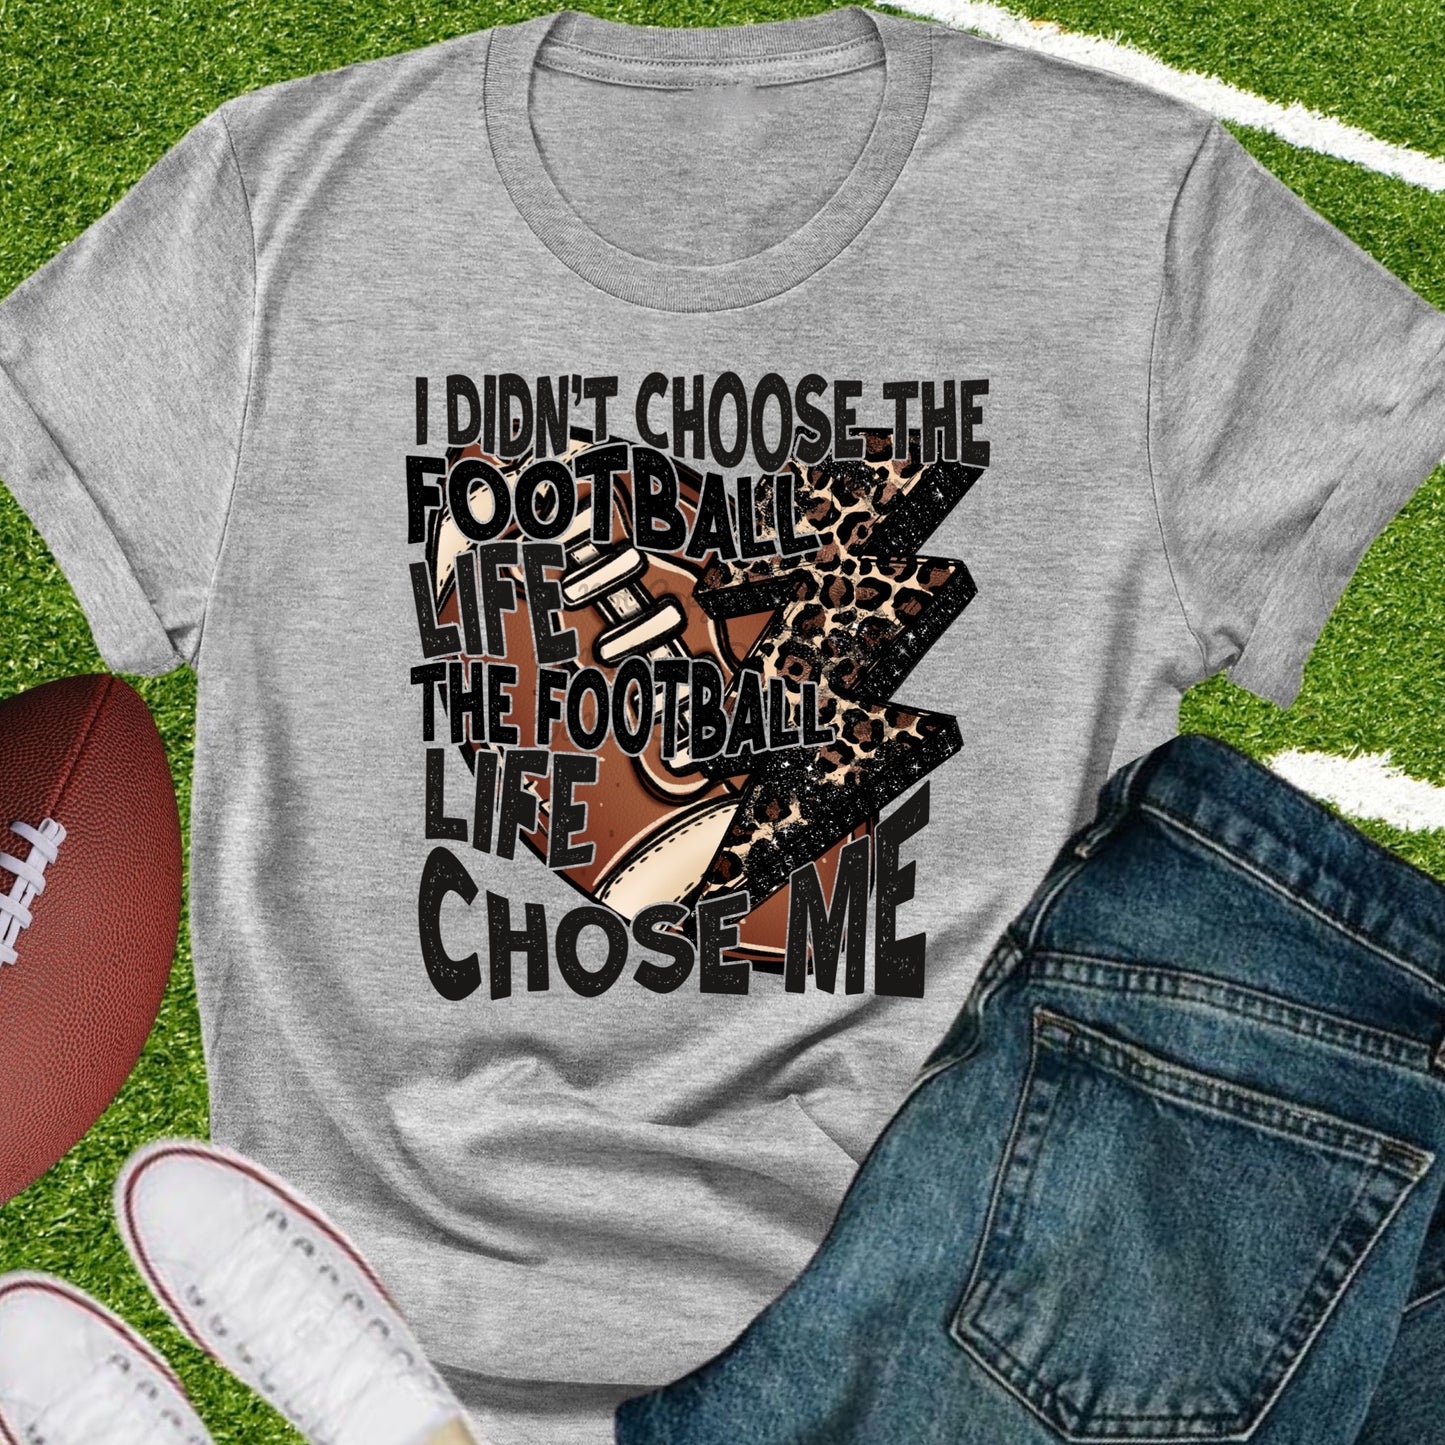 I didn’t choose football life-DTF